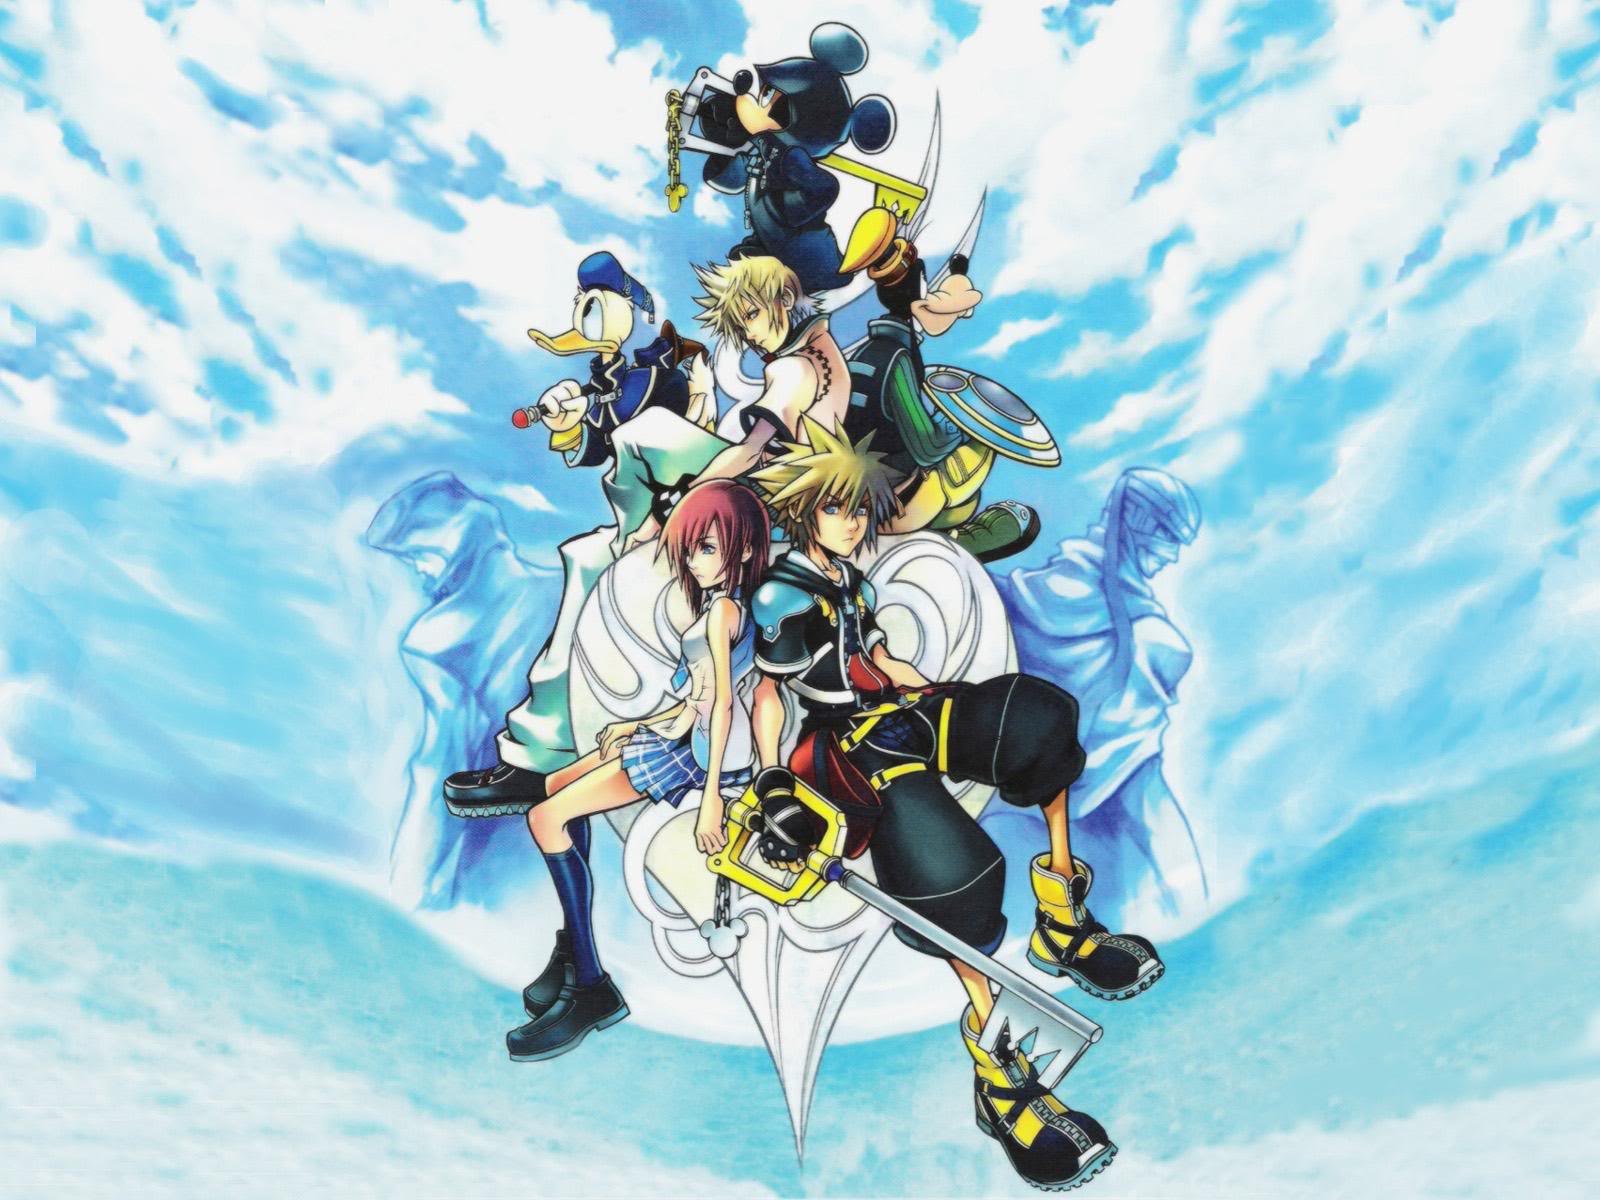 Amv] Kingdom Hearts - Kingdom Hearts 2 Final Mix , HD Wallpaper & Backgrounds